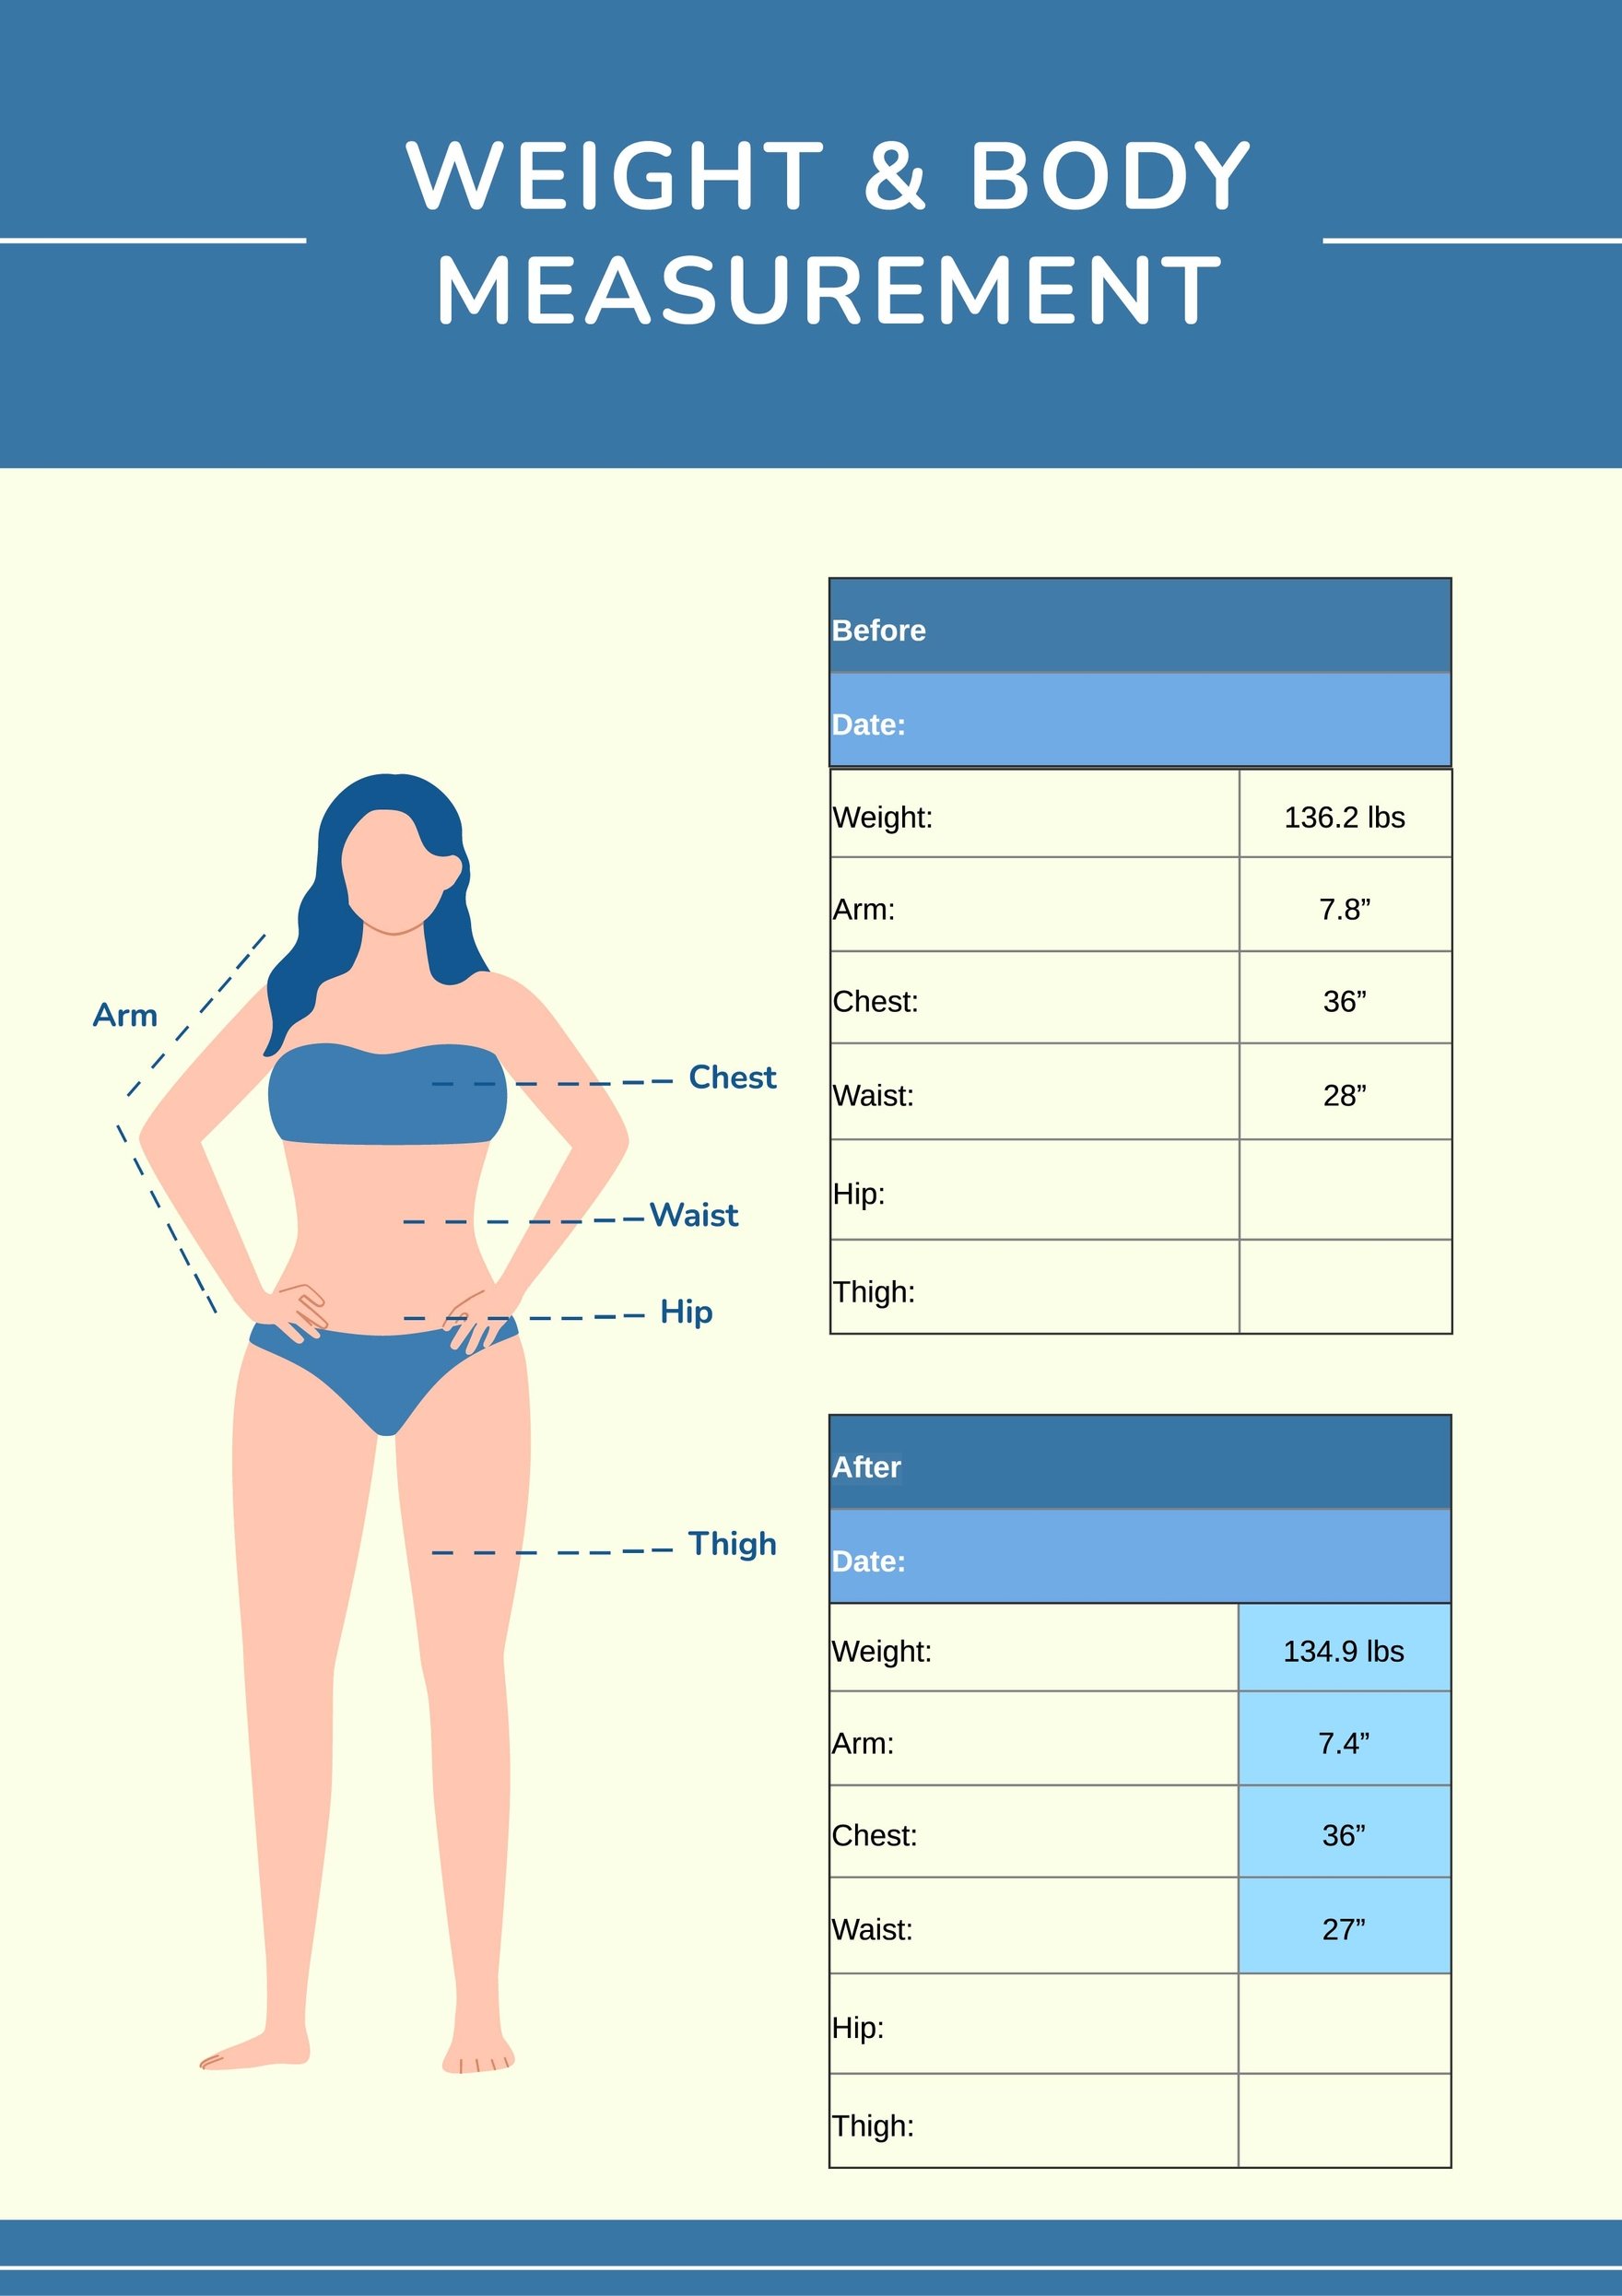 Women's Body Measurement Chart